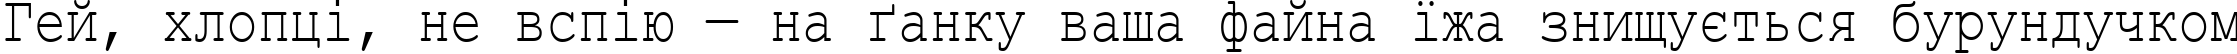 Пример написания шрифтом Courier New Cyr_80n текста на украинском